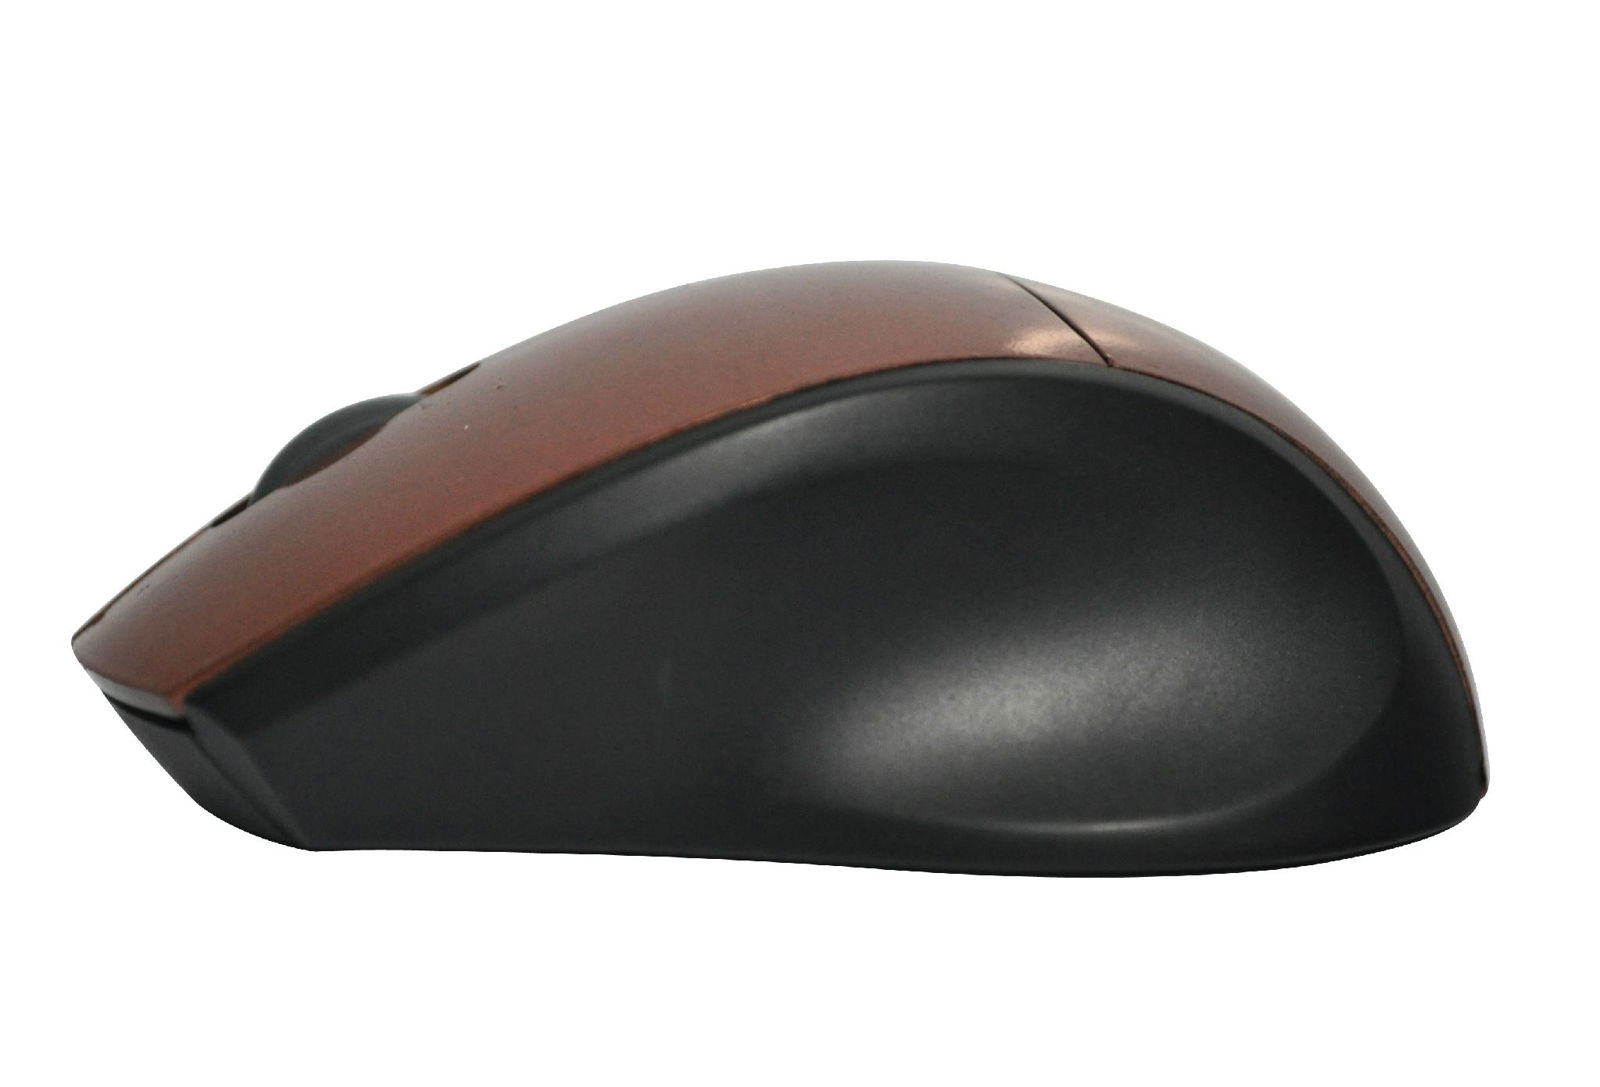 2015 hot sale beautiful mini 3d 2.4GHz wireless mouse pc computer laptop mouse 4